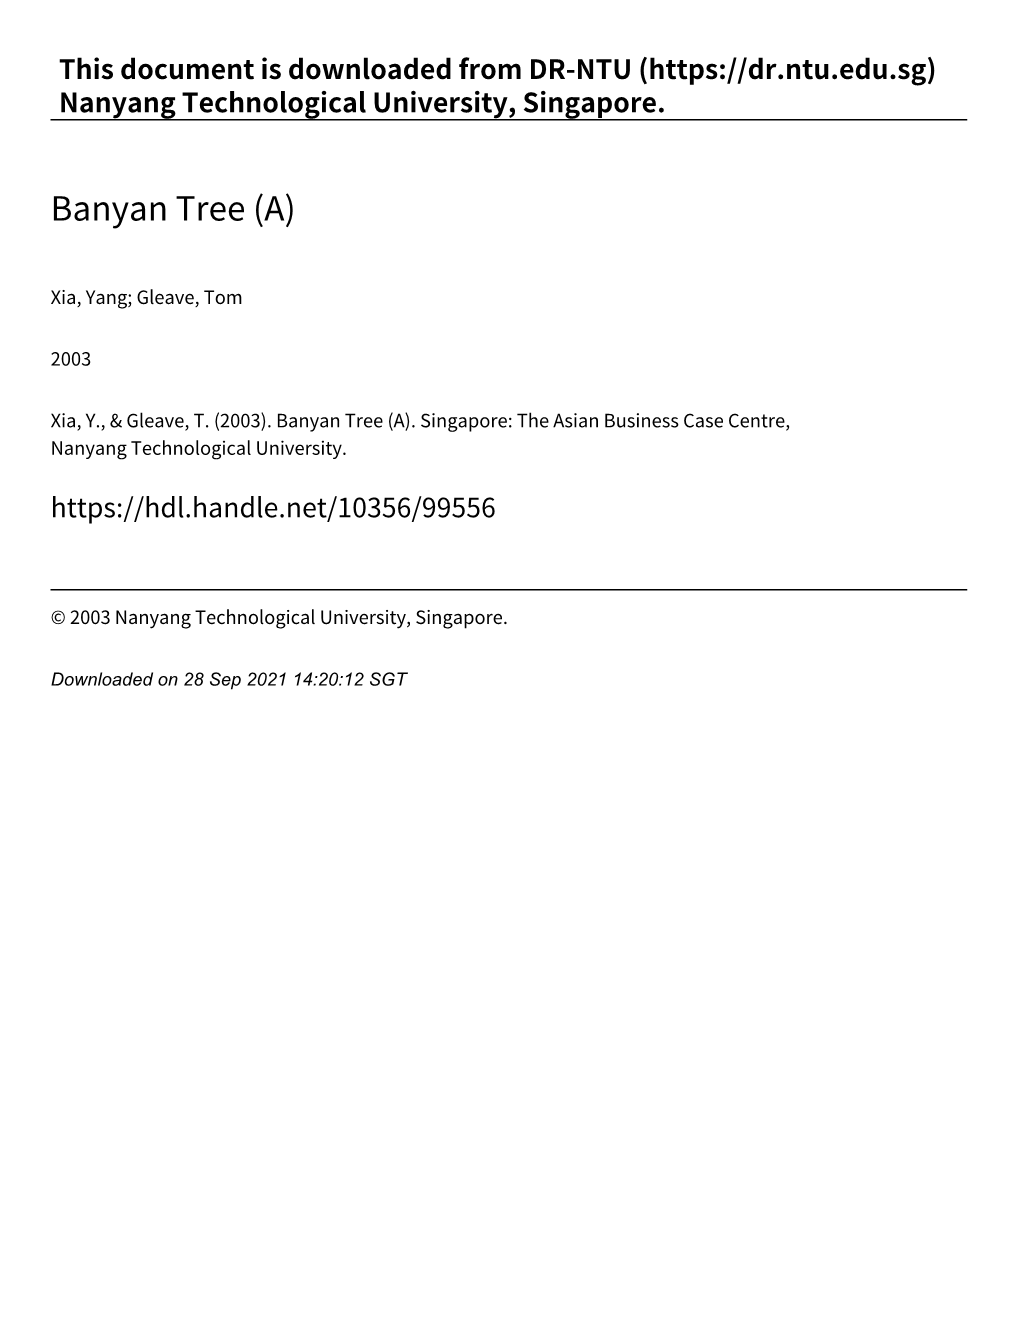 Banyan Tree (A)